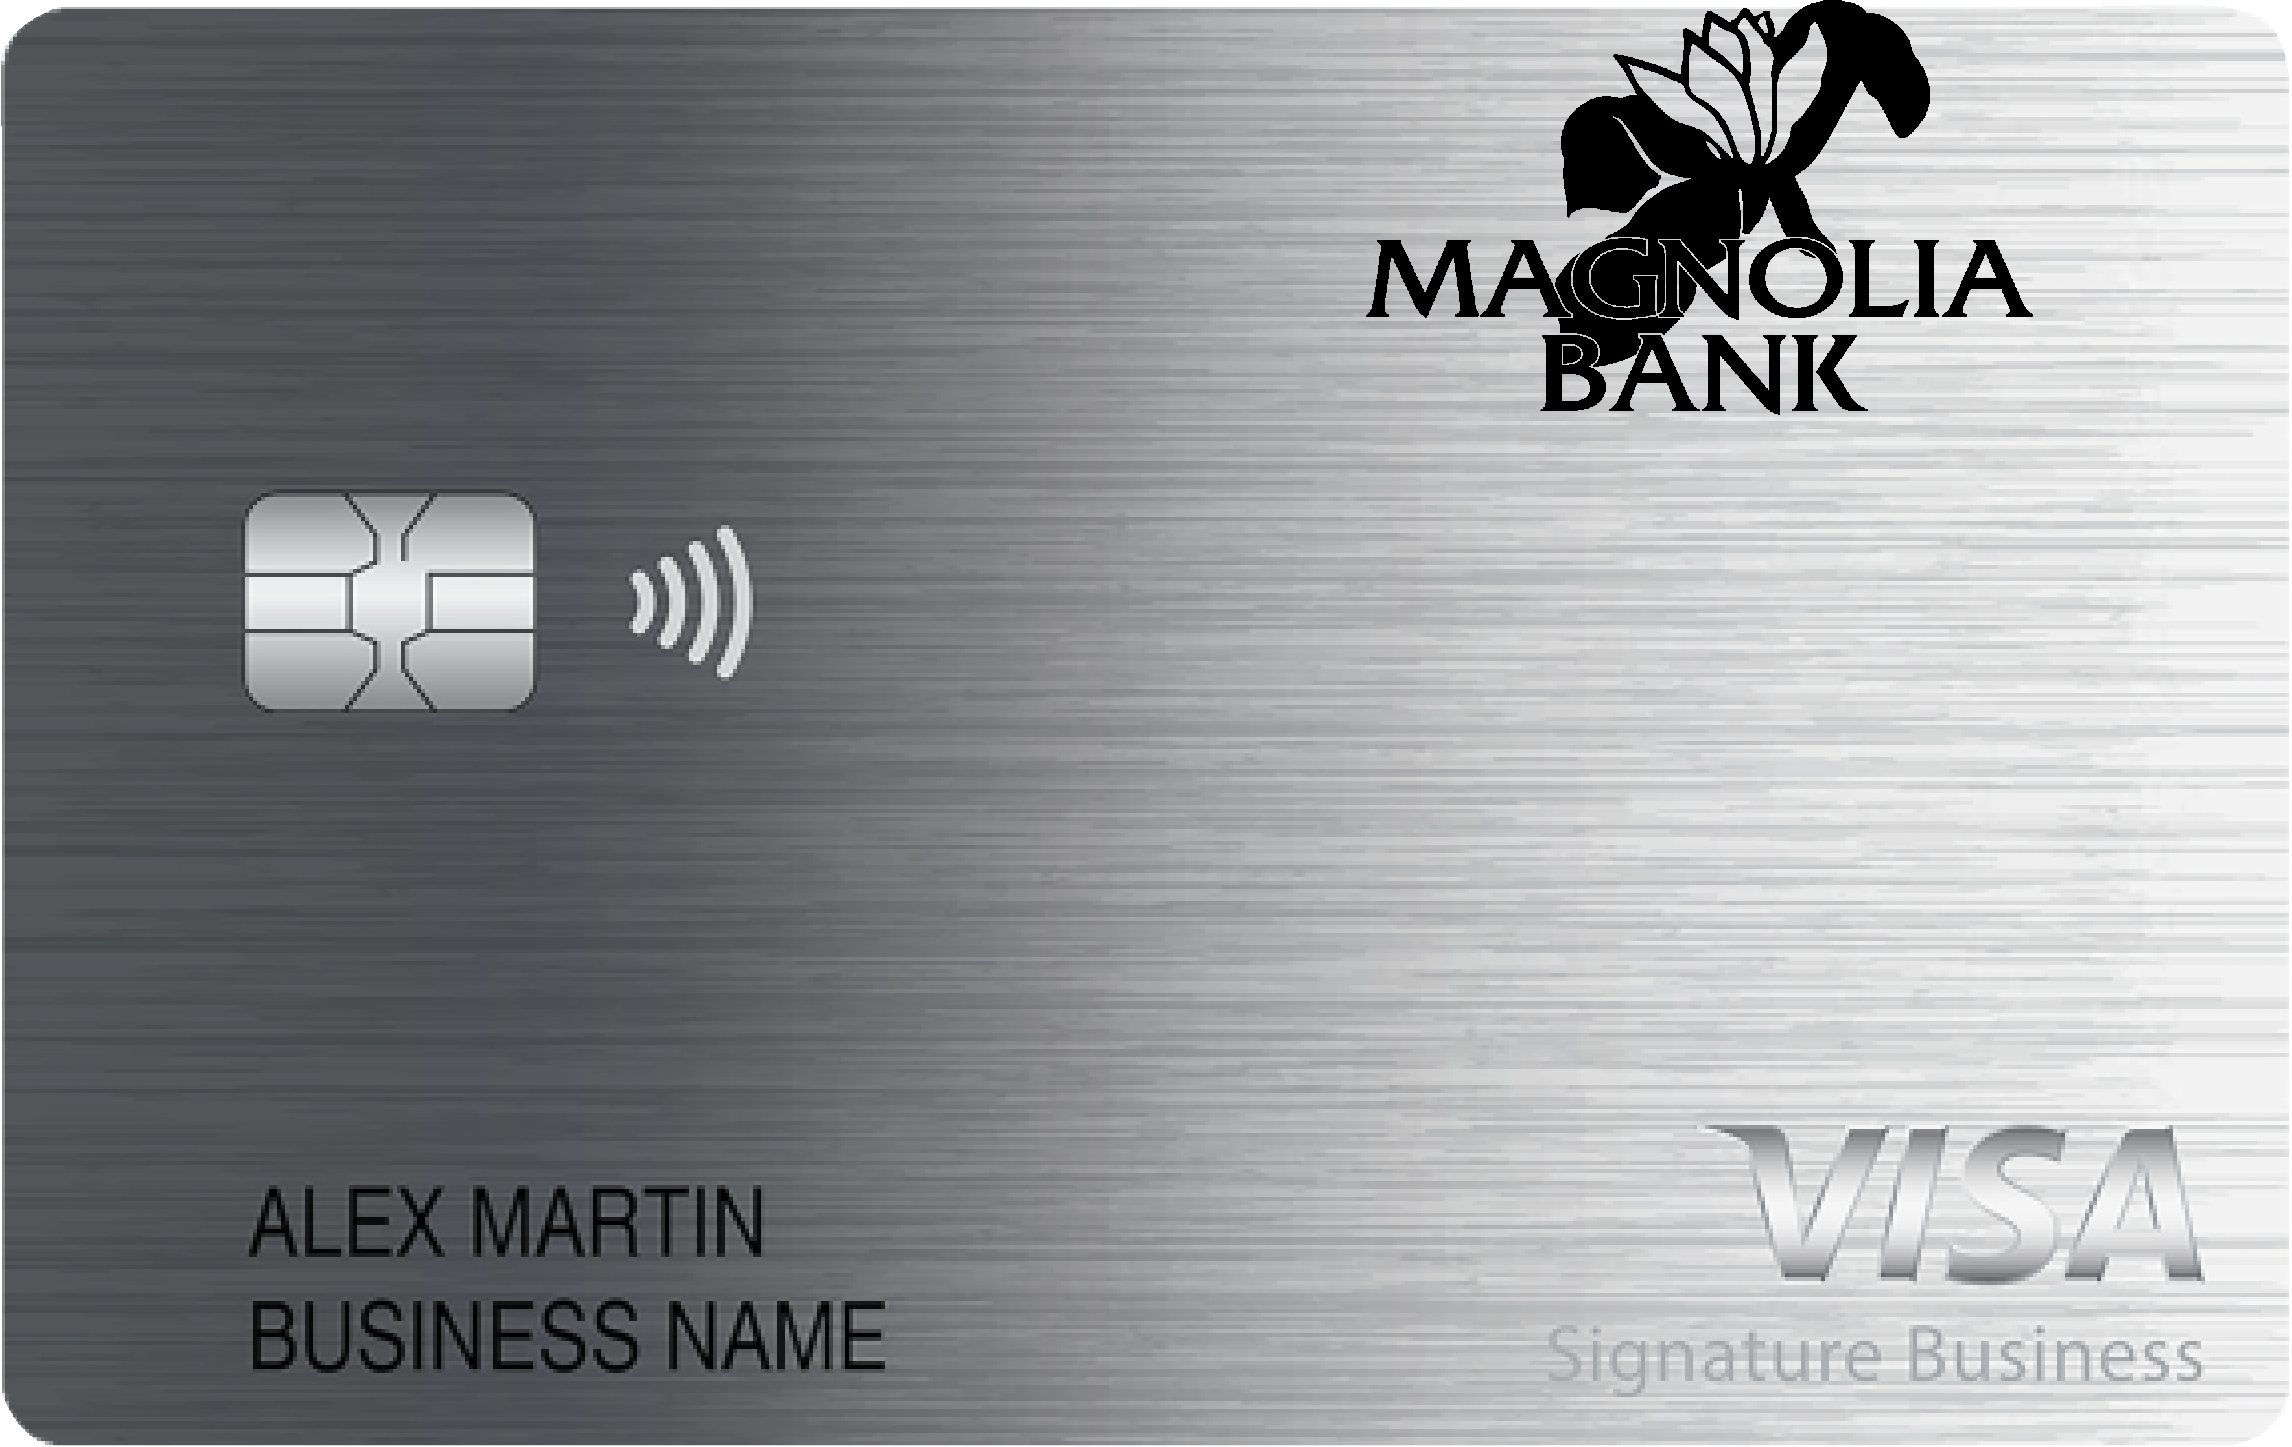 Magnolia Bank Smart Business Rewards Card